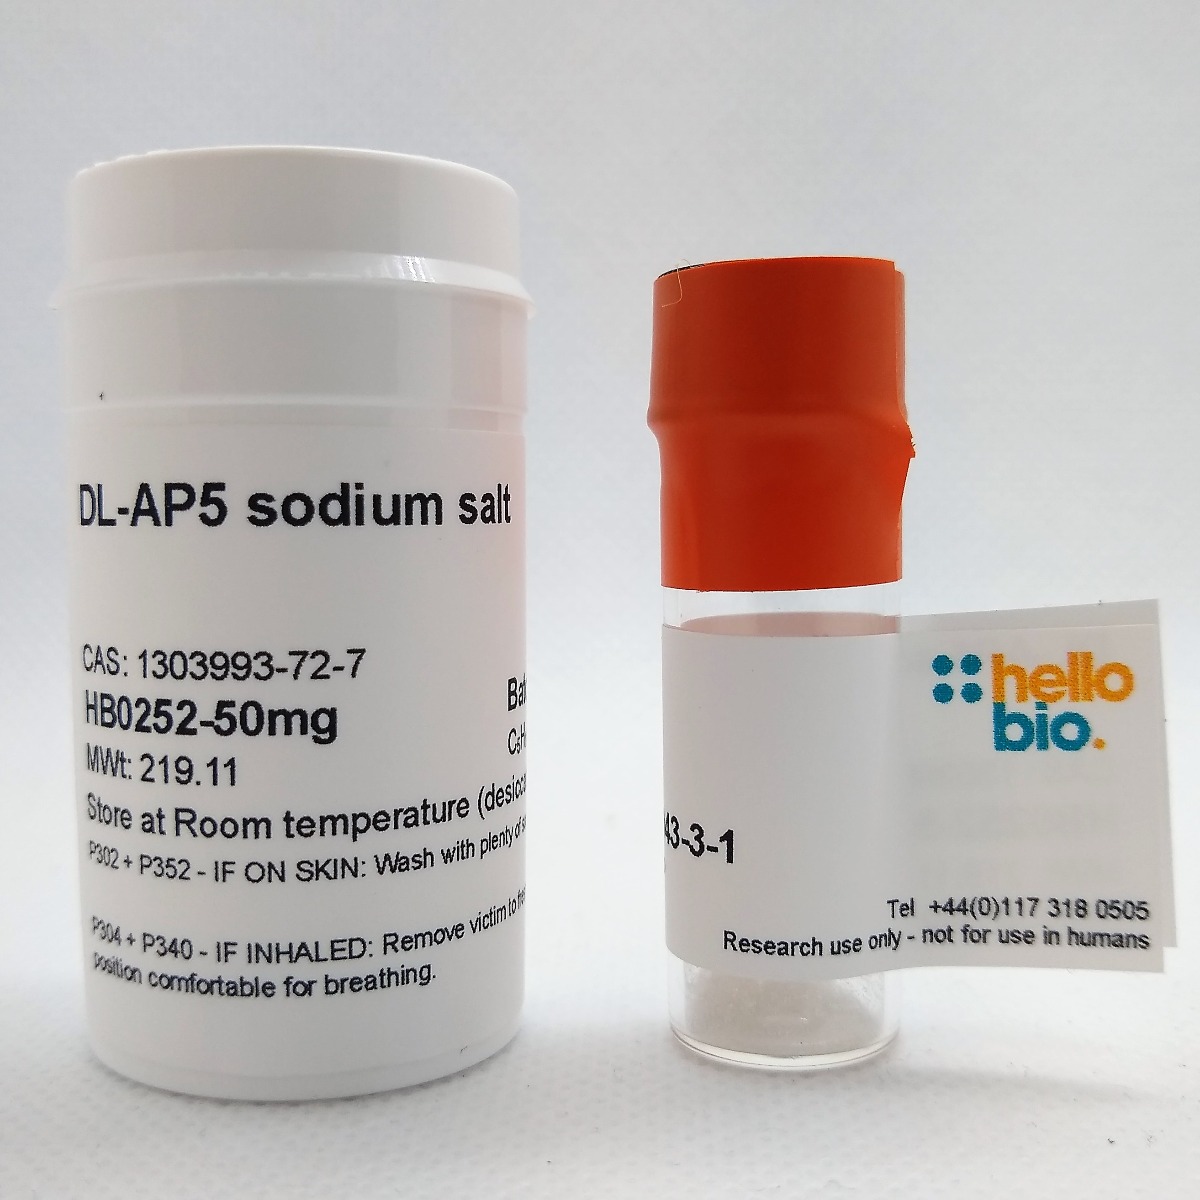 DL-AP5 sodium salt product vial image | Hello Bio